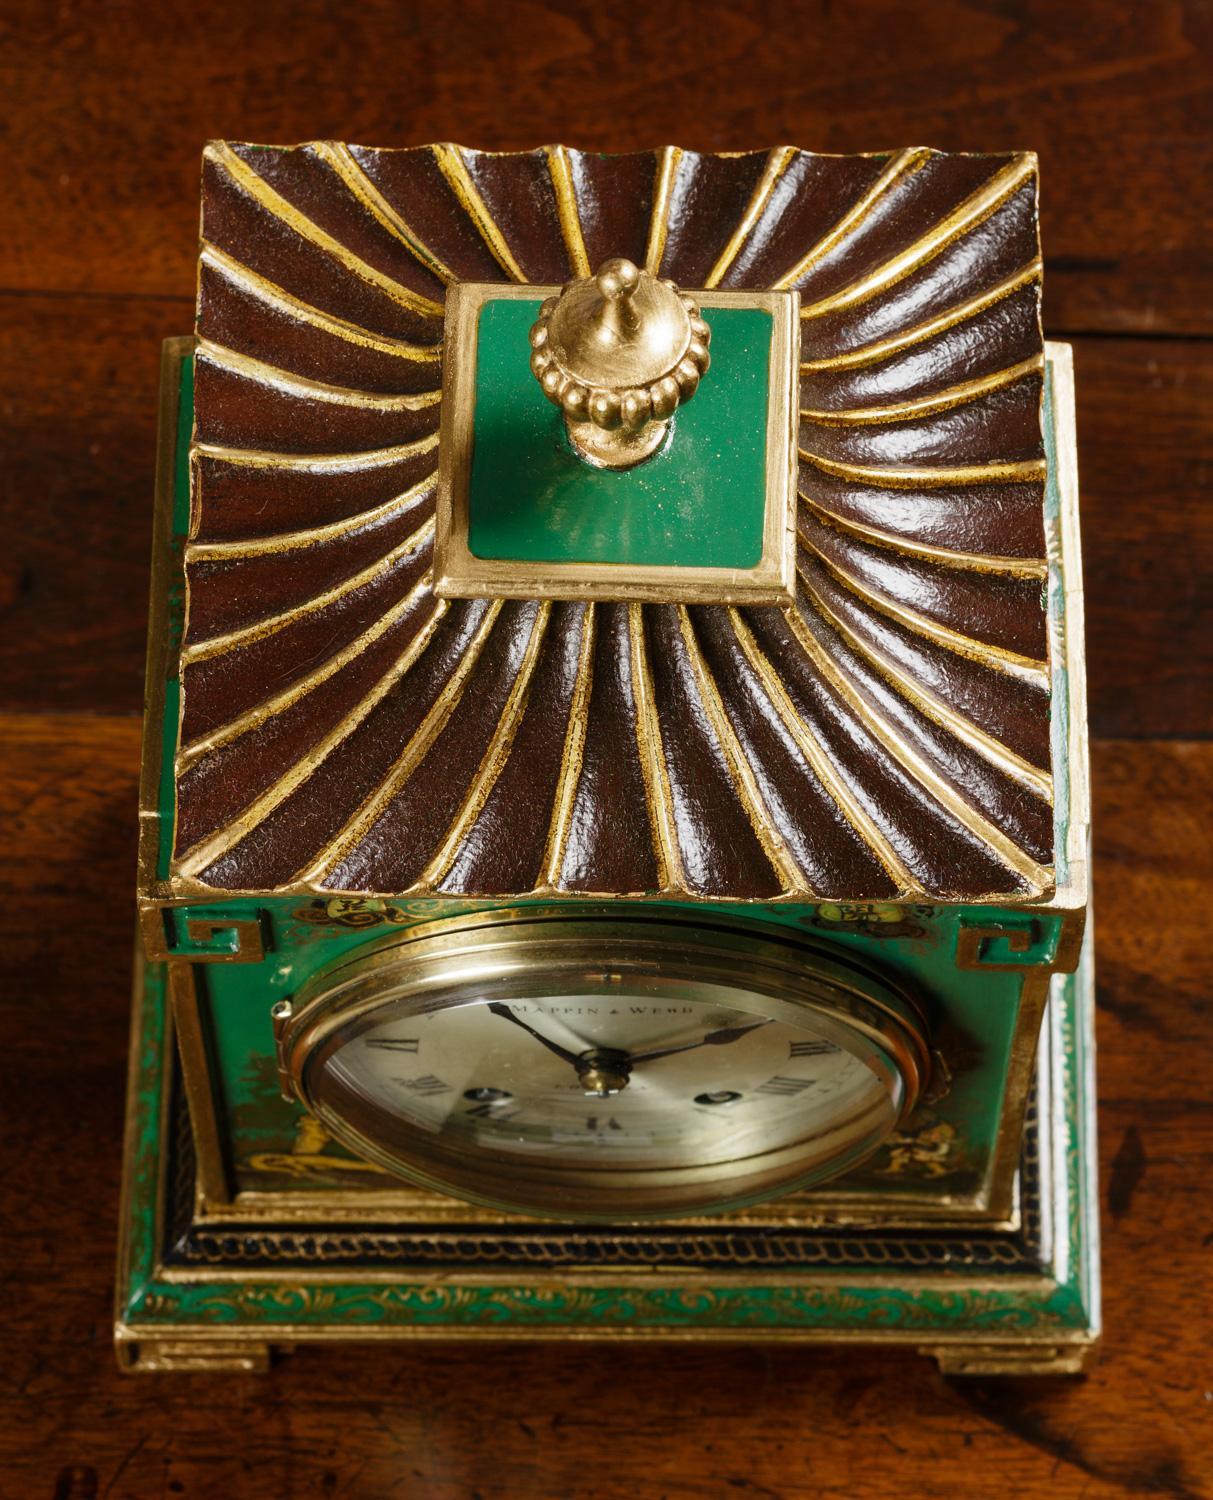 Edwardian Chinoiserie Decorated Mantel Clock 1